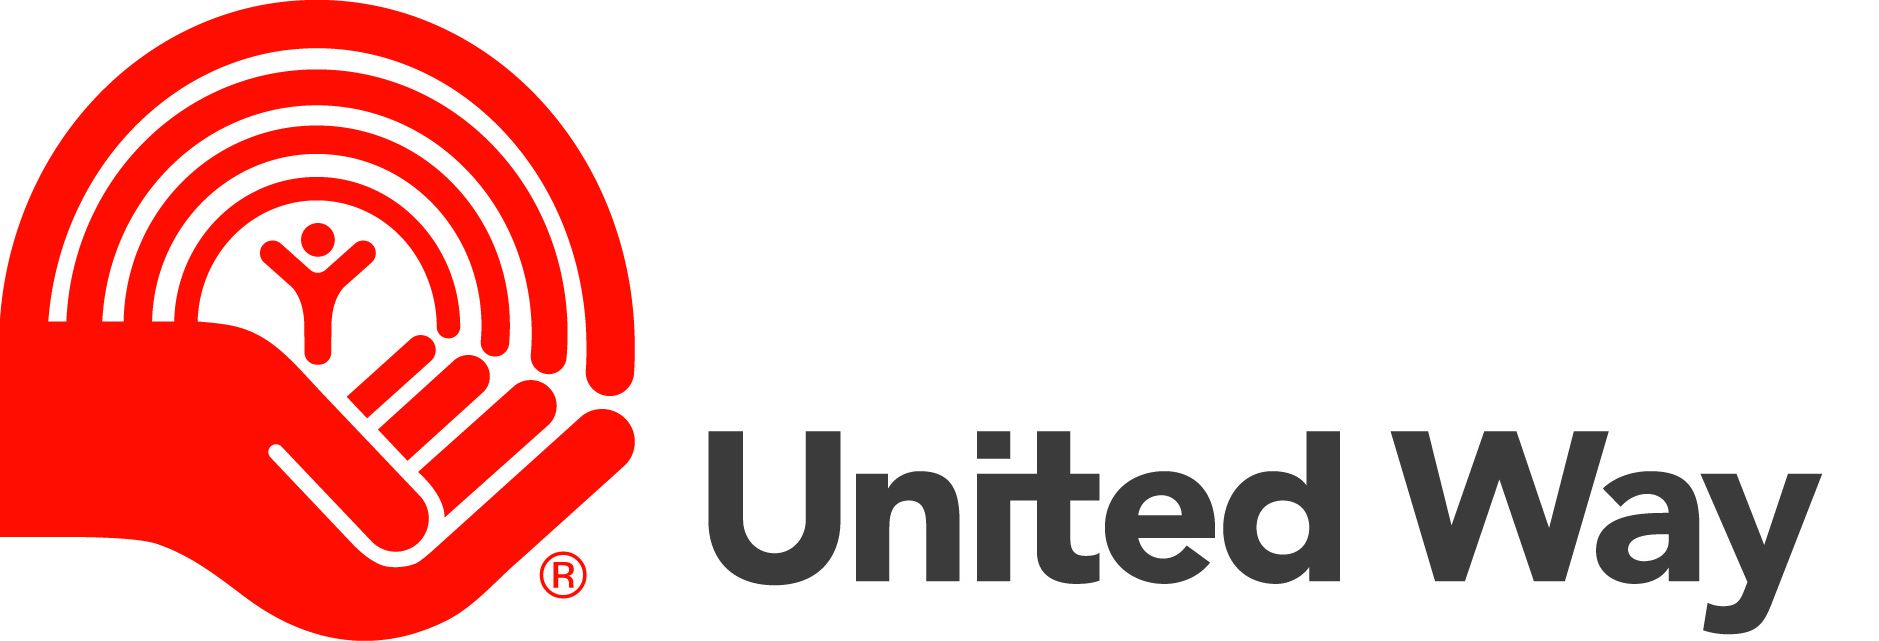 clip art united way logo - photo #13